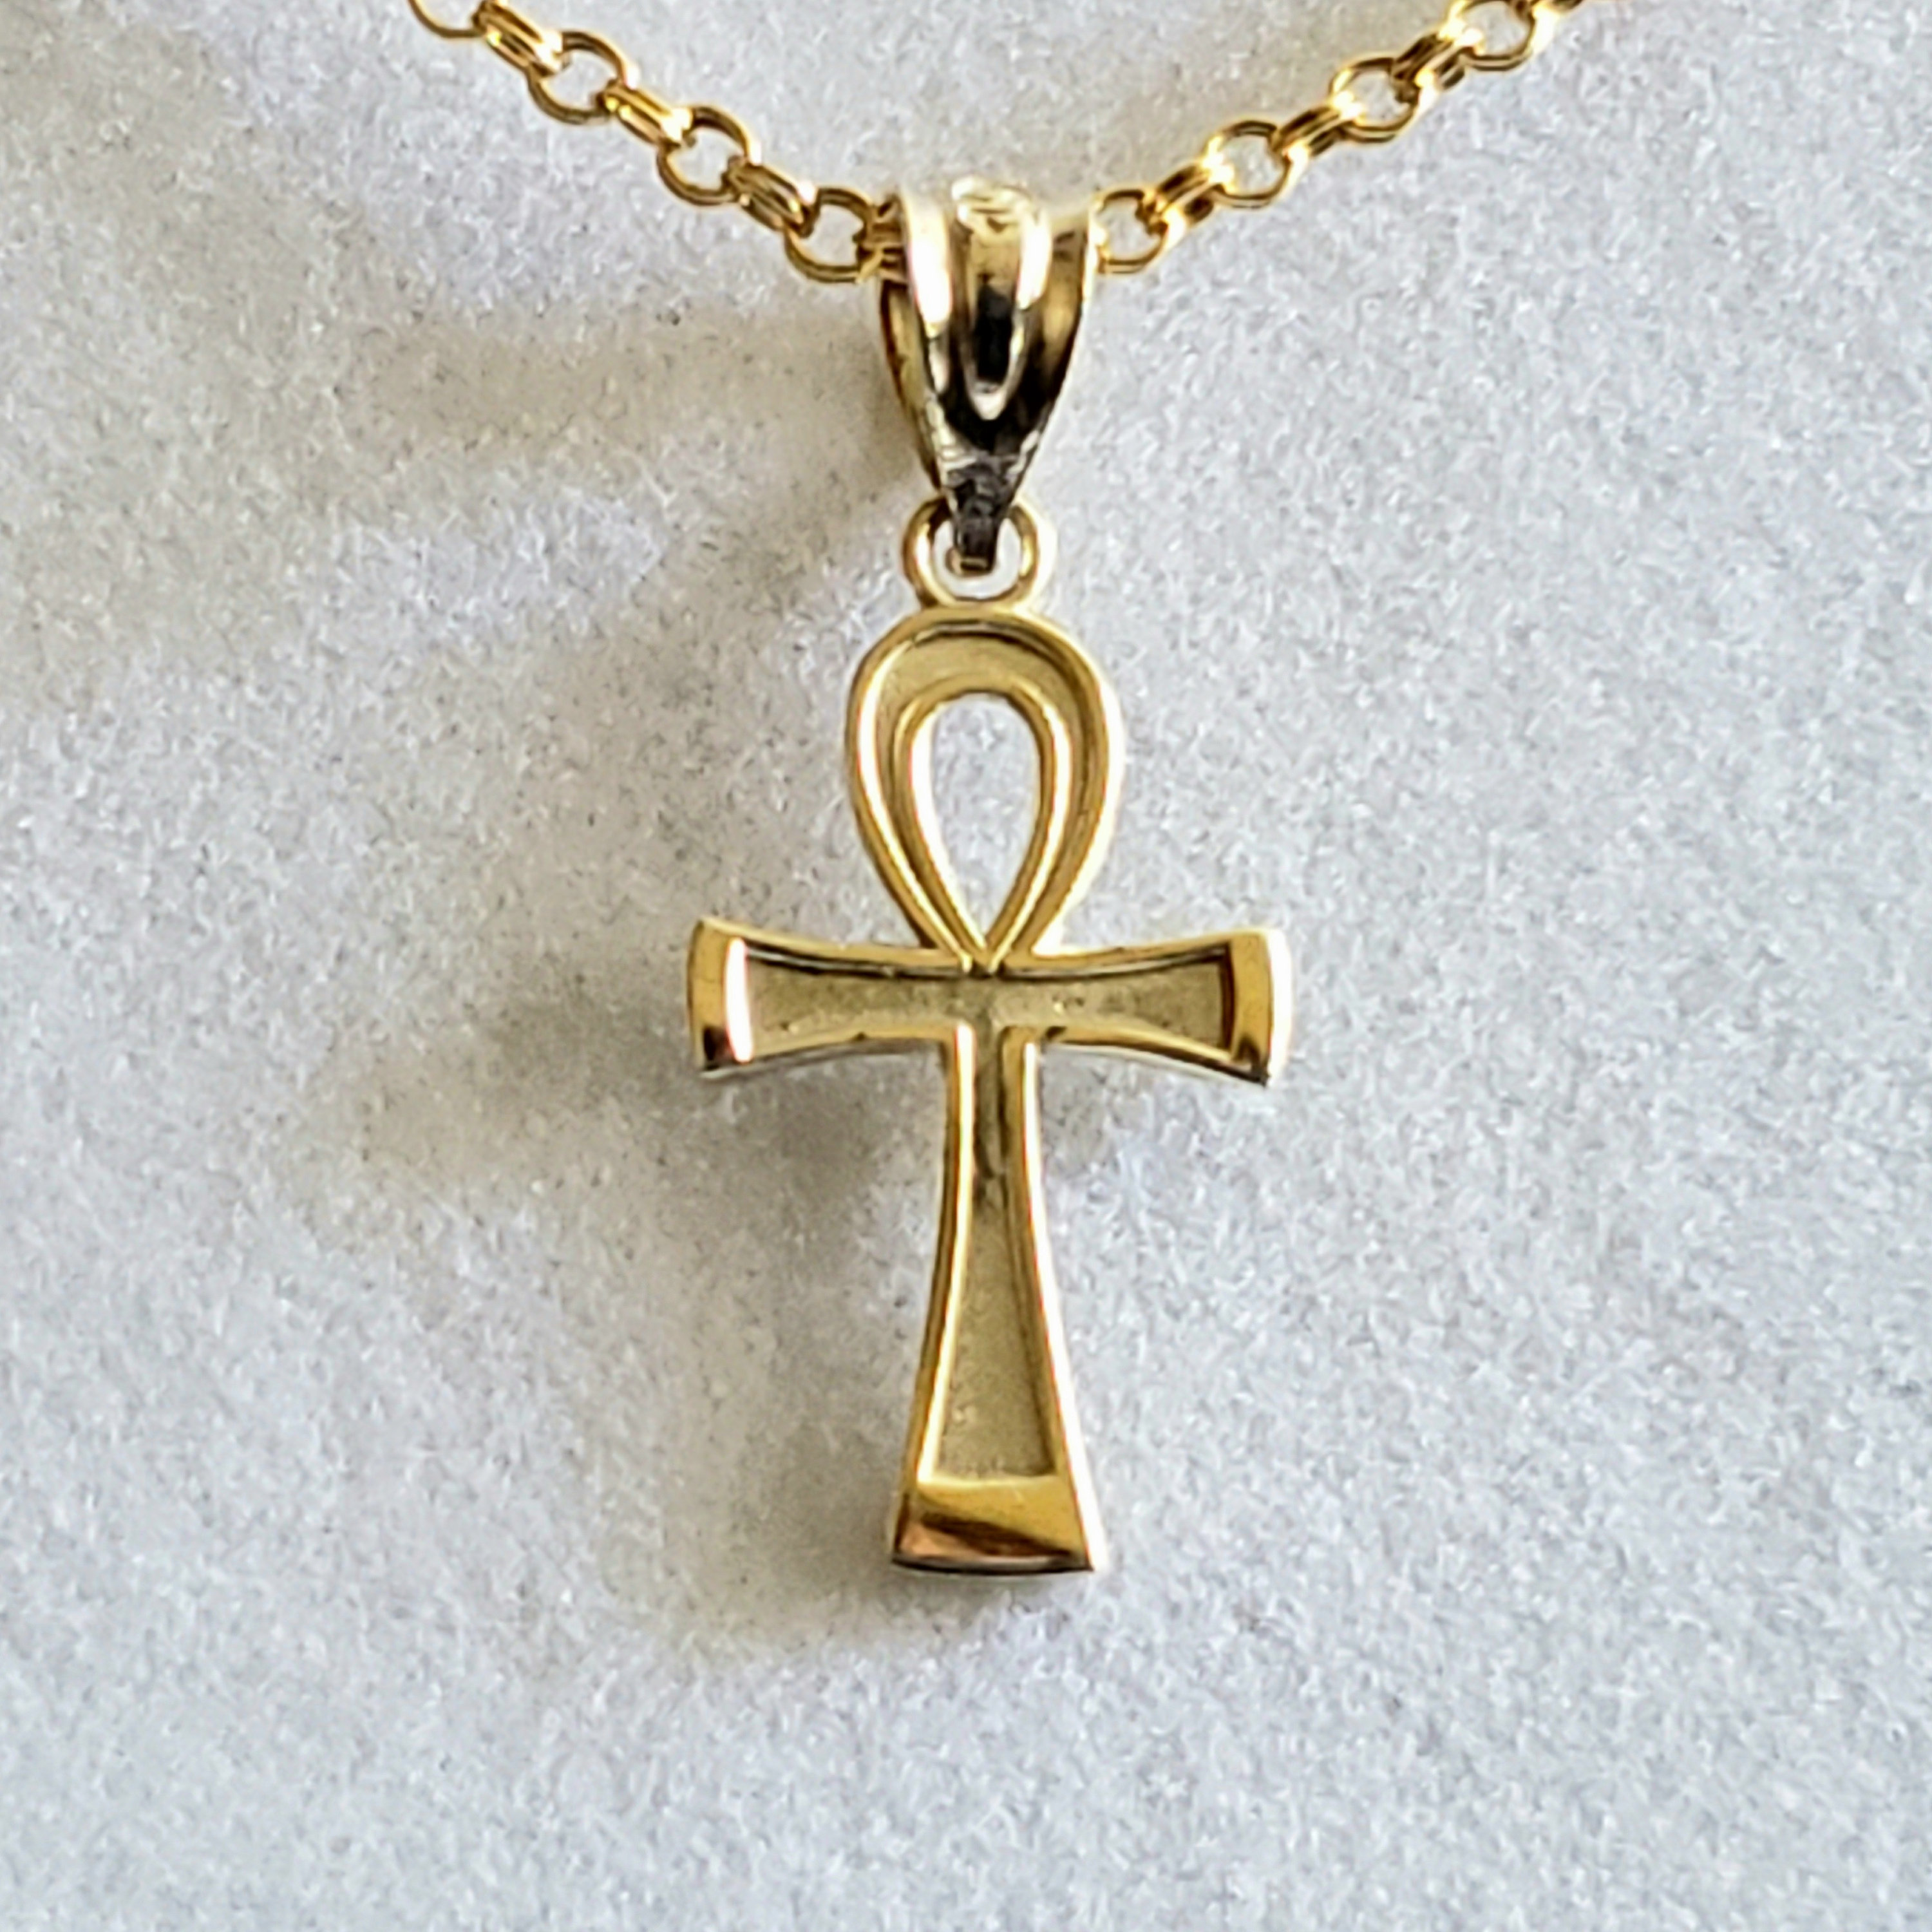 Ankh 10K Gold Egyptian Cross Pendant, Necklace With 14K Gold